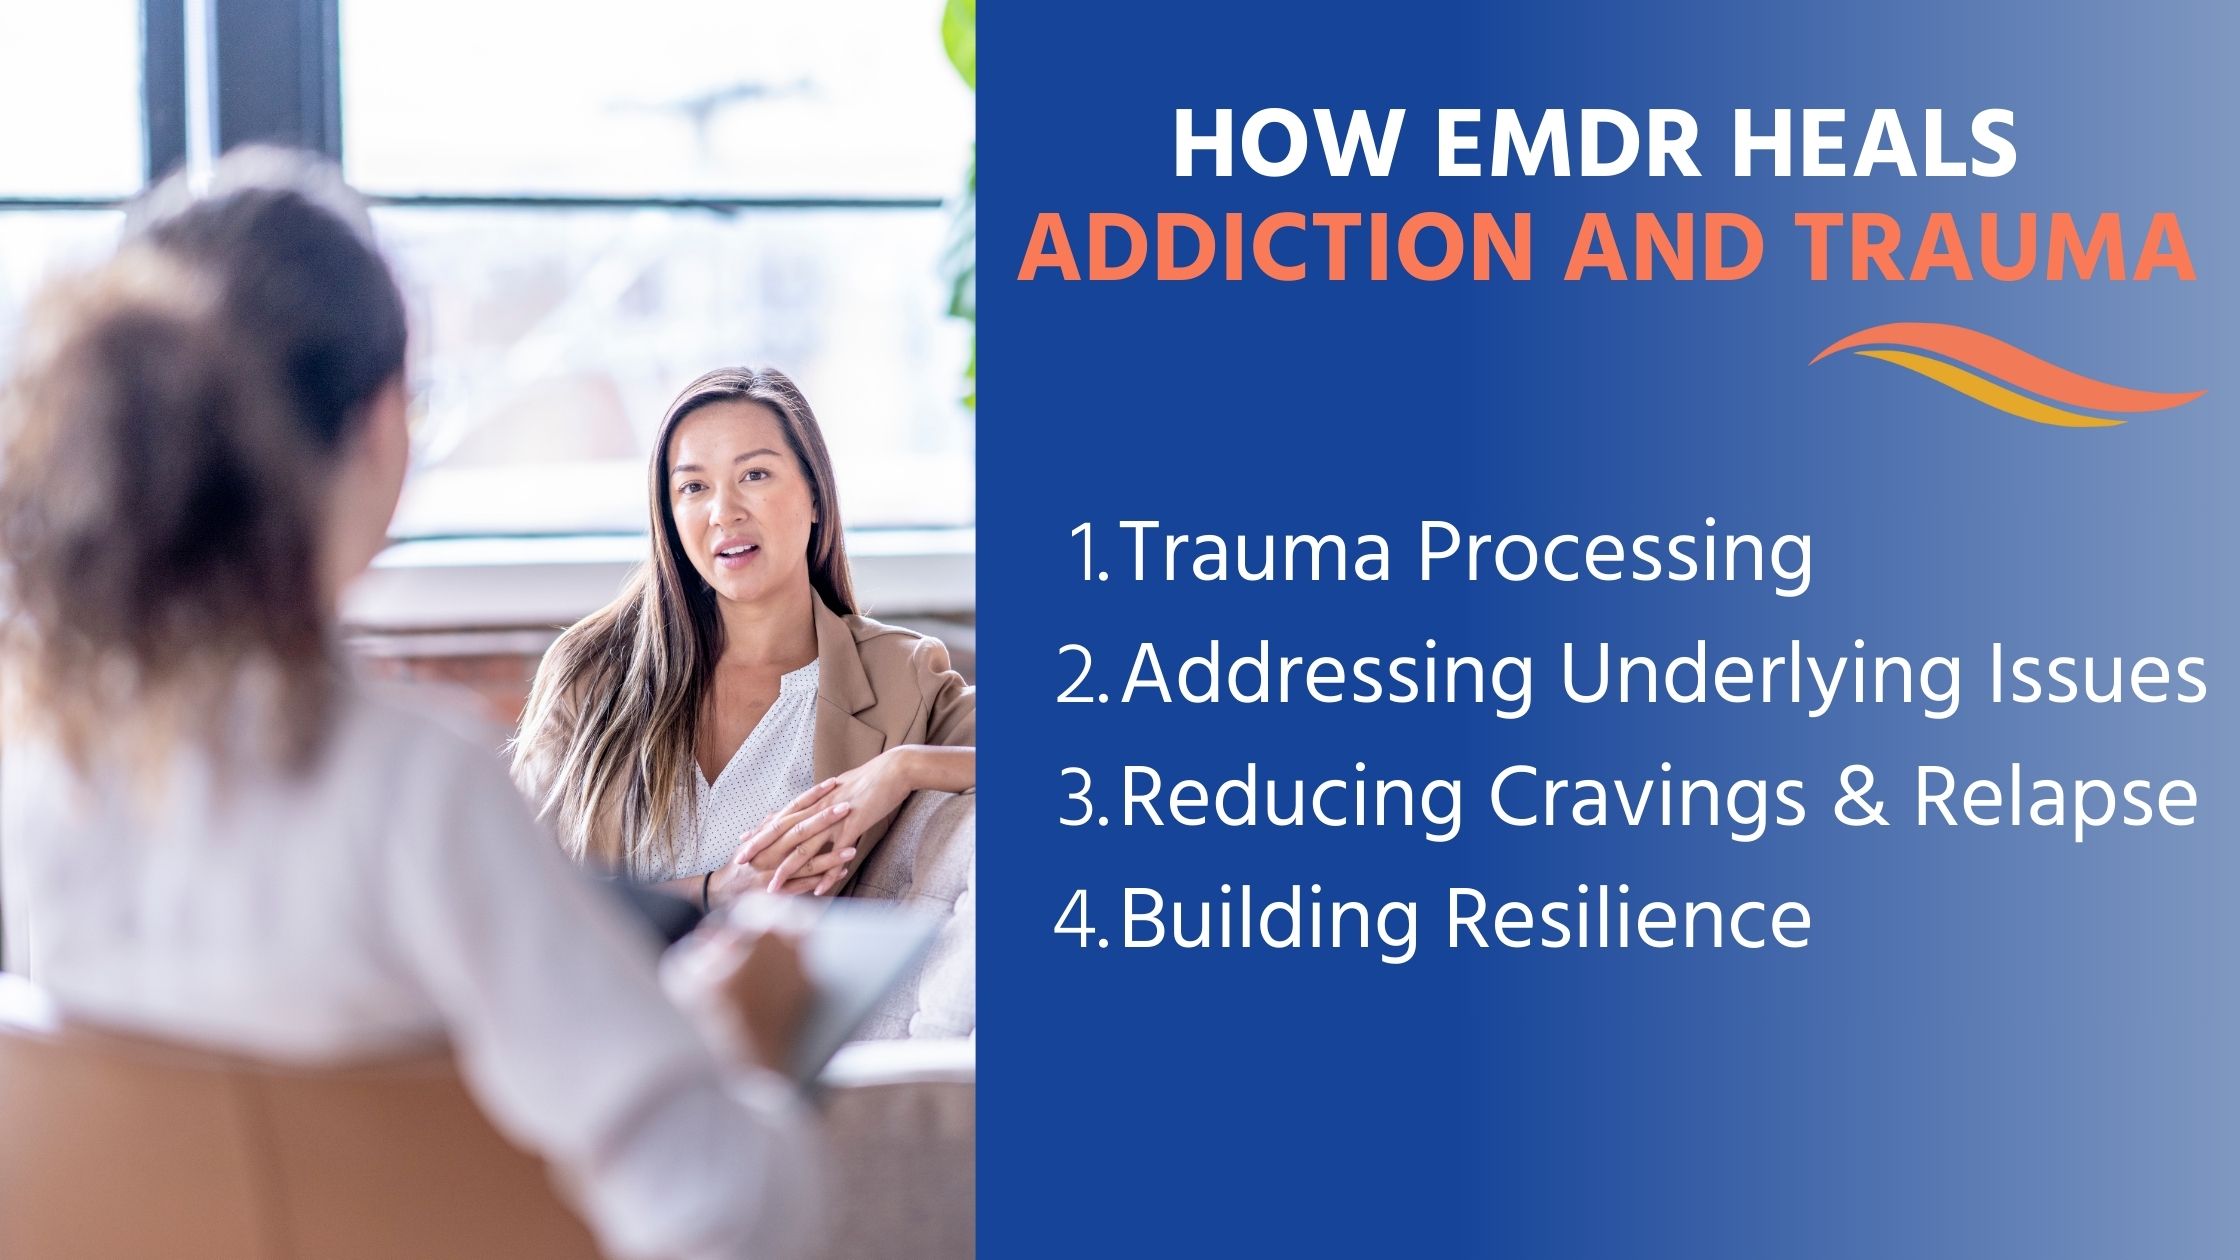 Four ways EMDR heals addiction and trauma